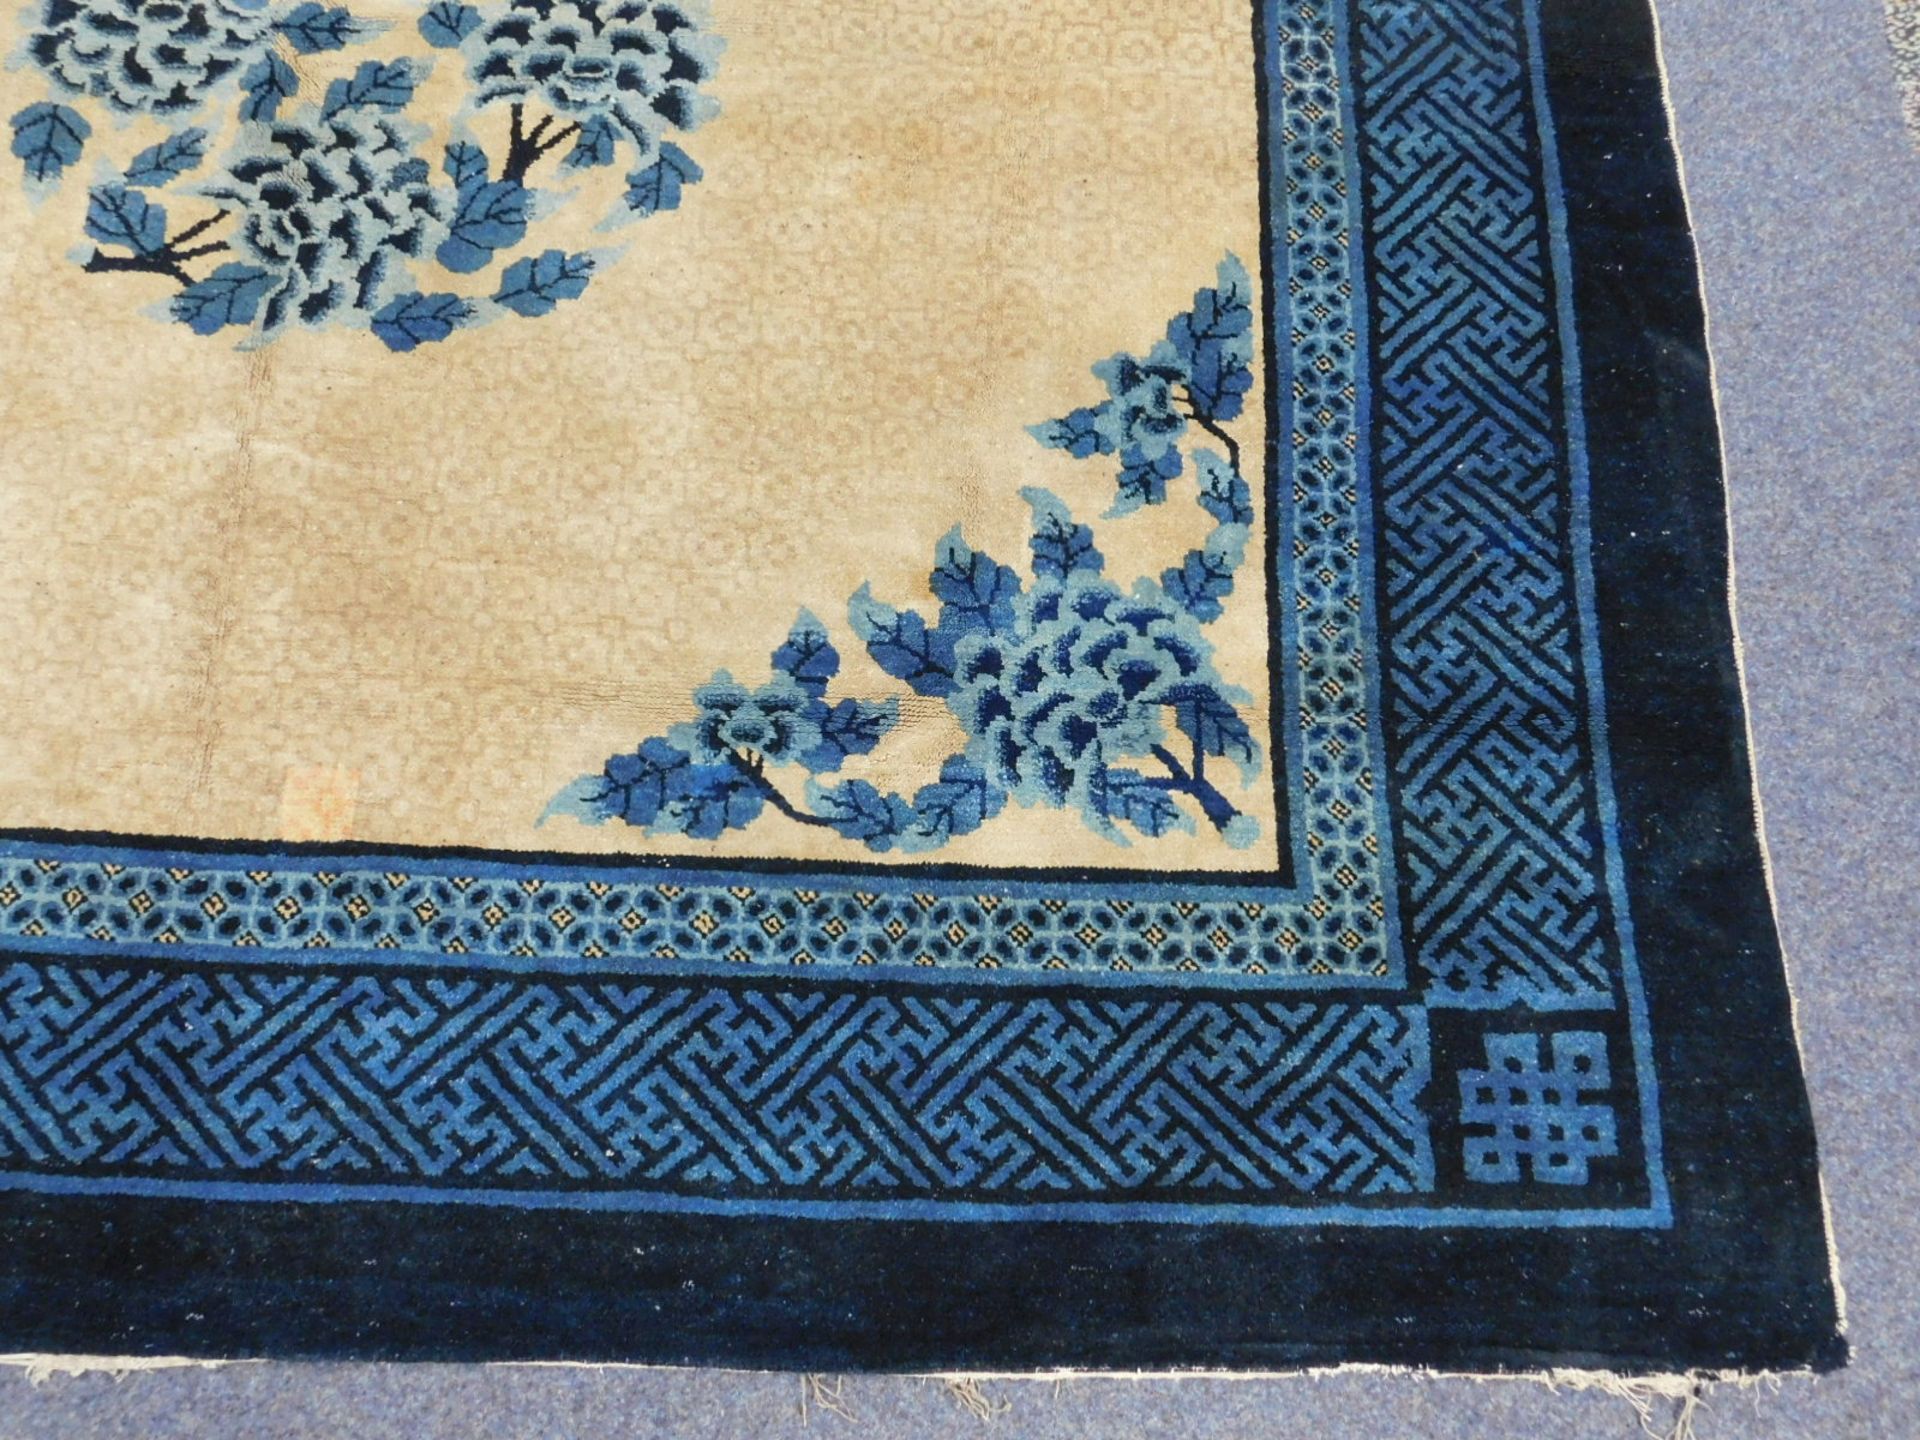 Pau-Tou China Teppich antik über 100 Jahre alt. - Bild 3 aus 10